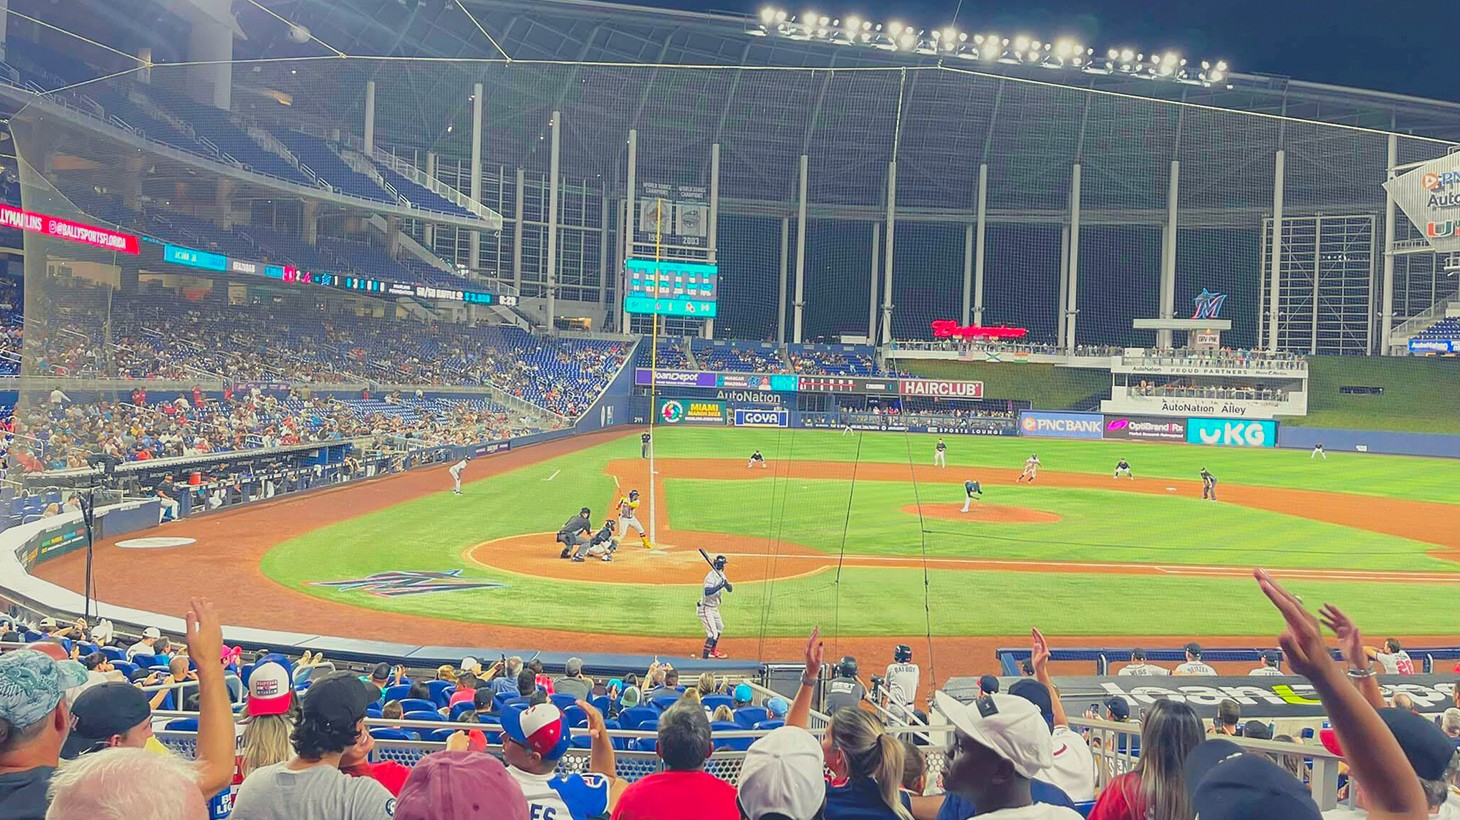 Miami: Witness an Miami Marlins Major League Baseball Game at loandepot Park